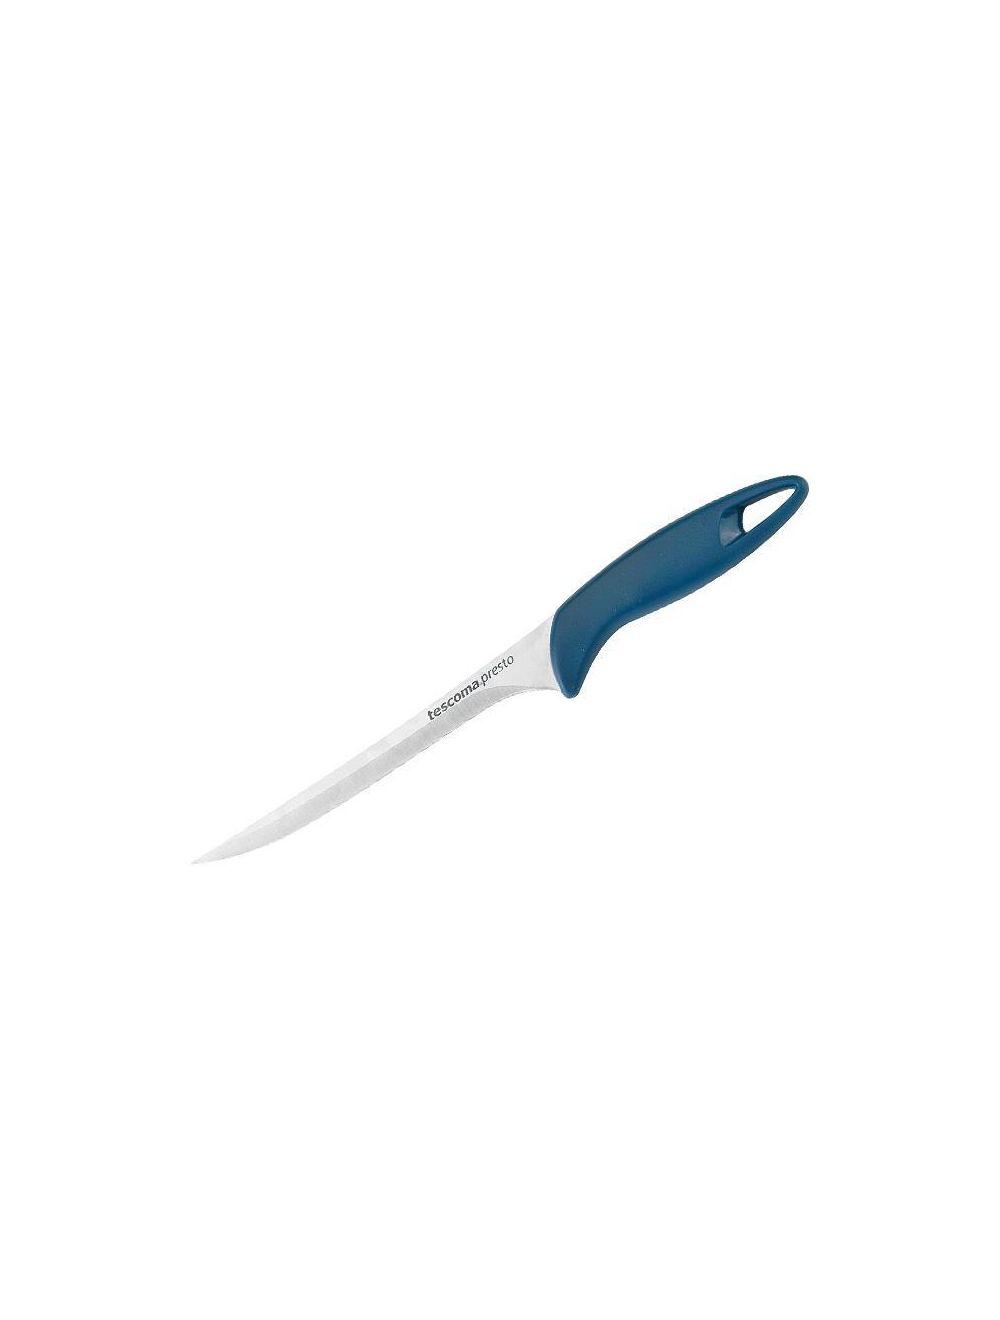 Tescoma Fillet Knife Presto 18cm - Assorted Colour